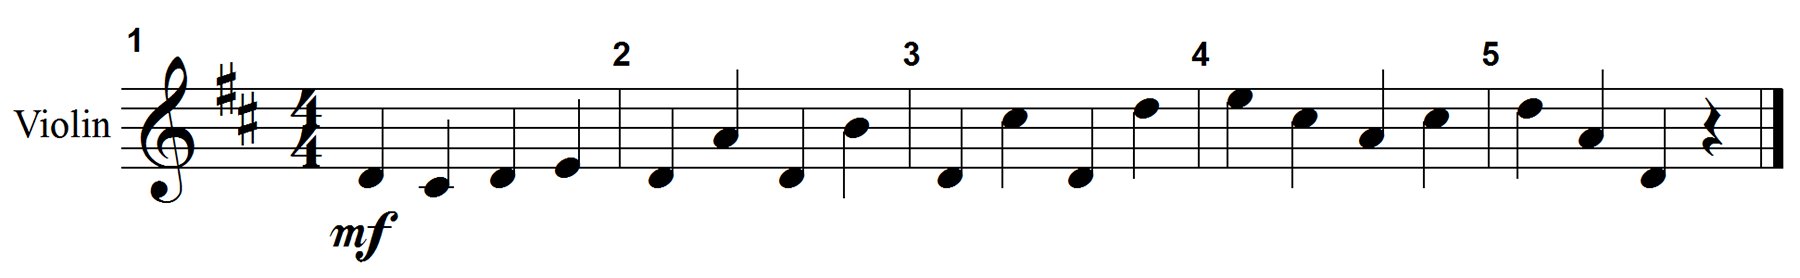 five-measure melody